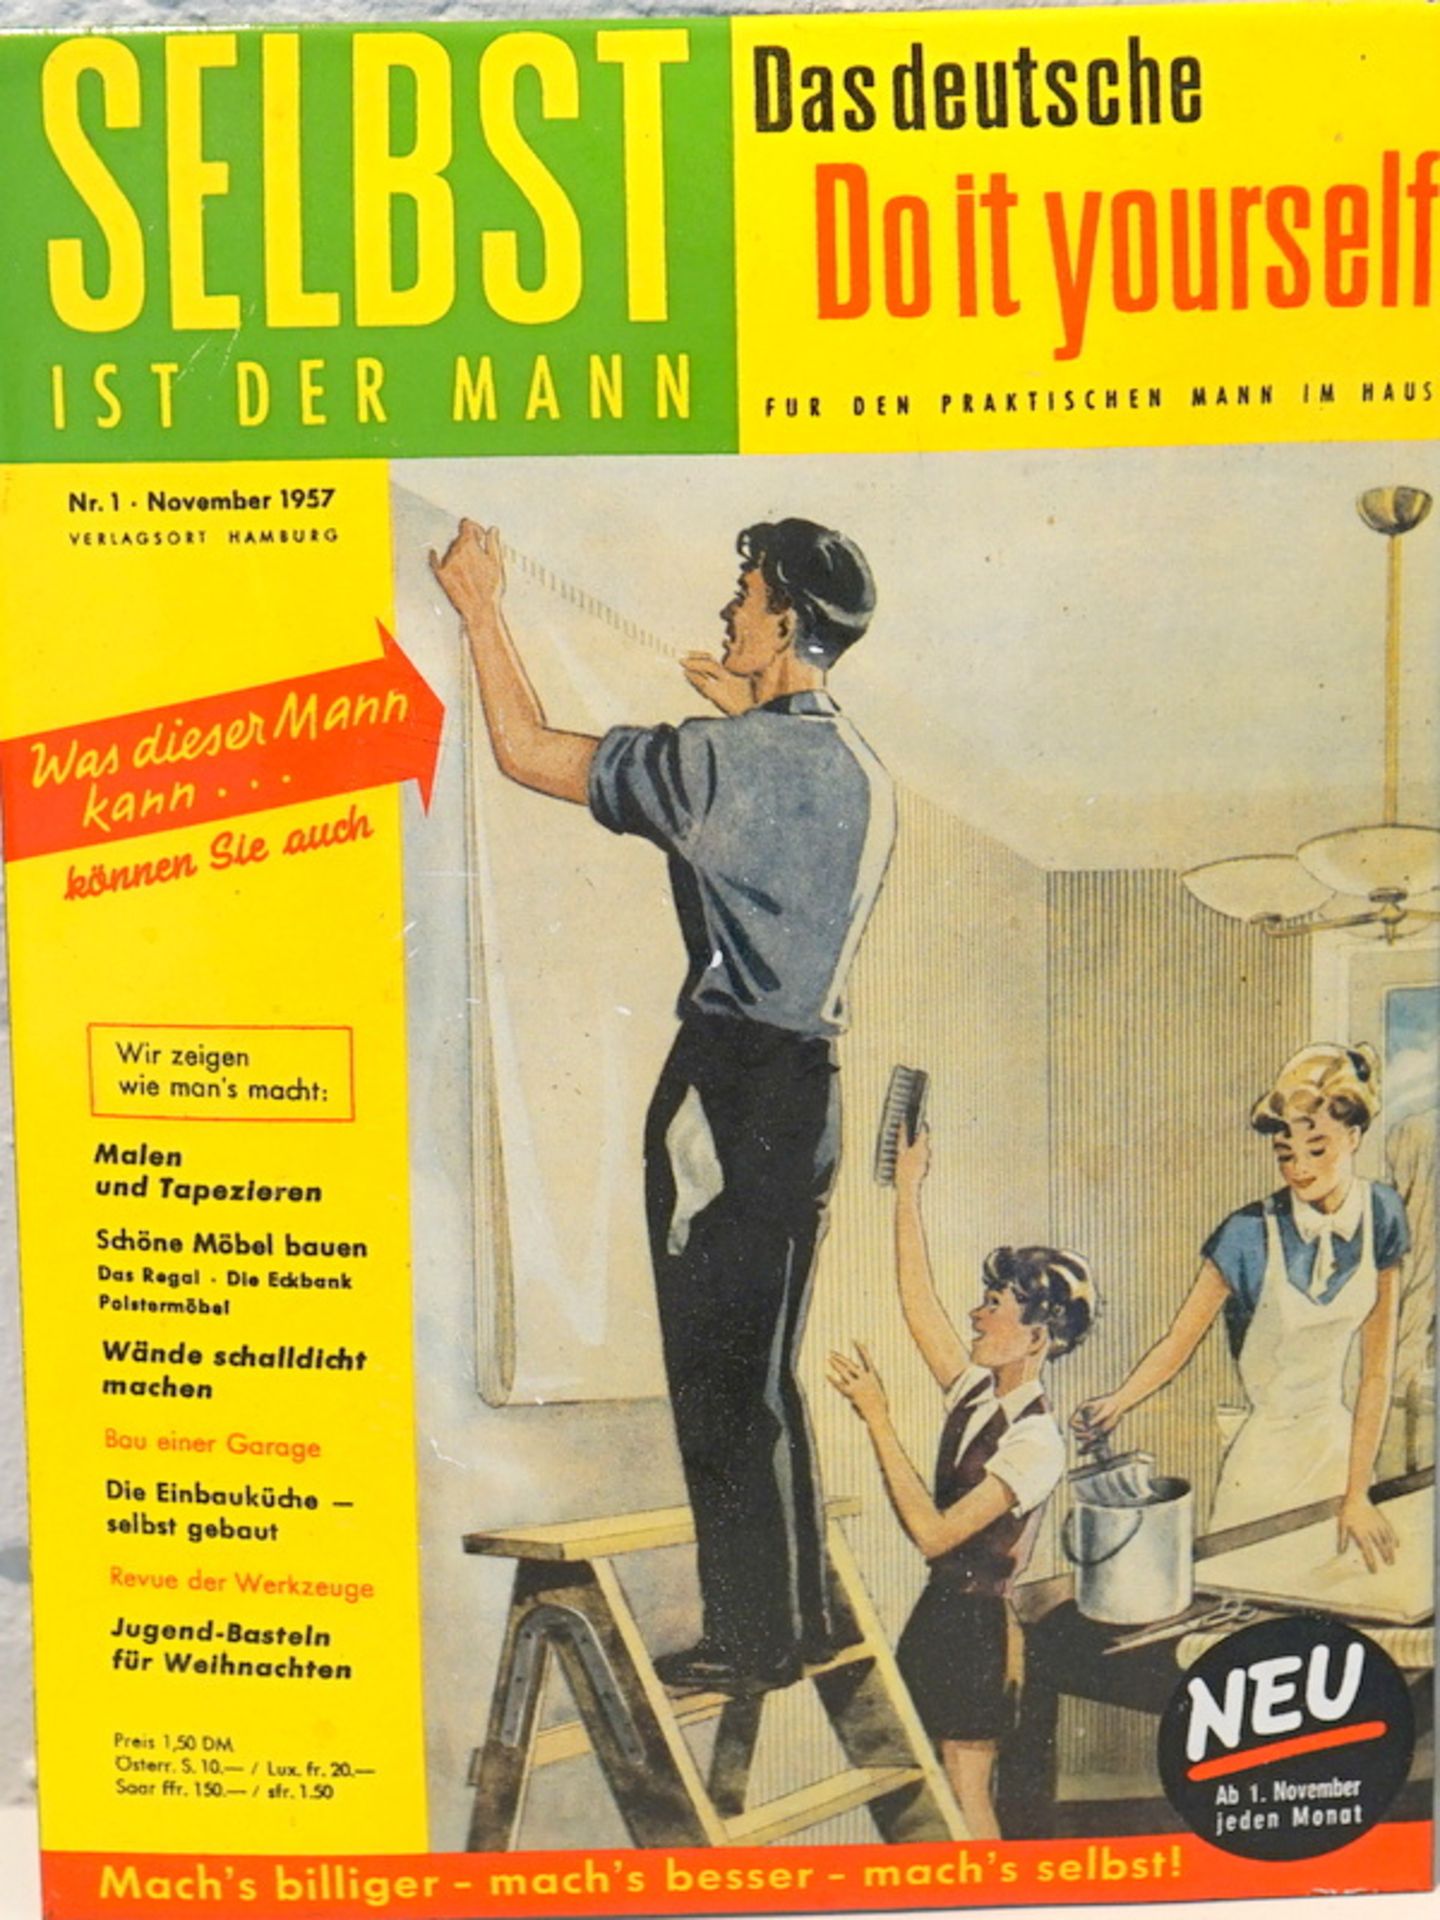 Selbst ist der Mann, Werbeschild, 1957 Reprint